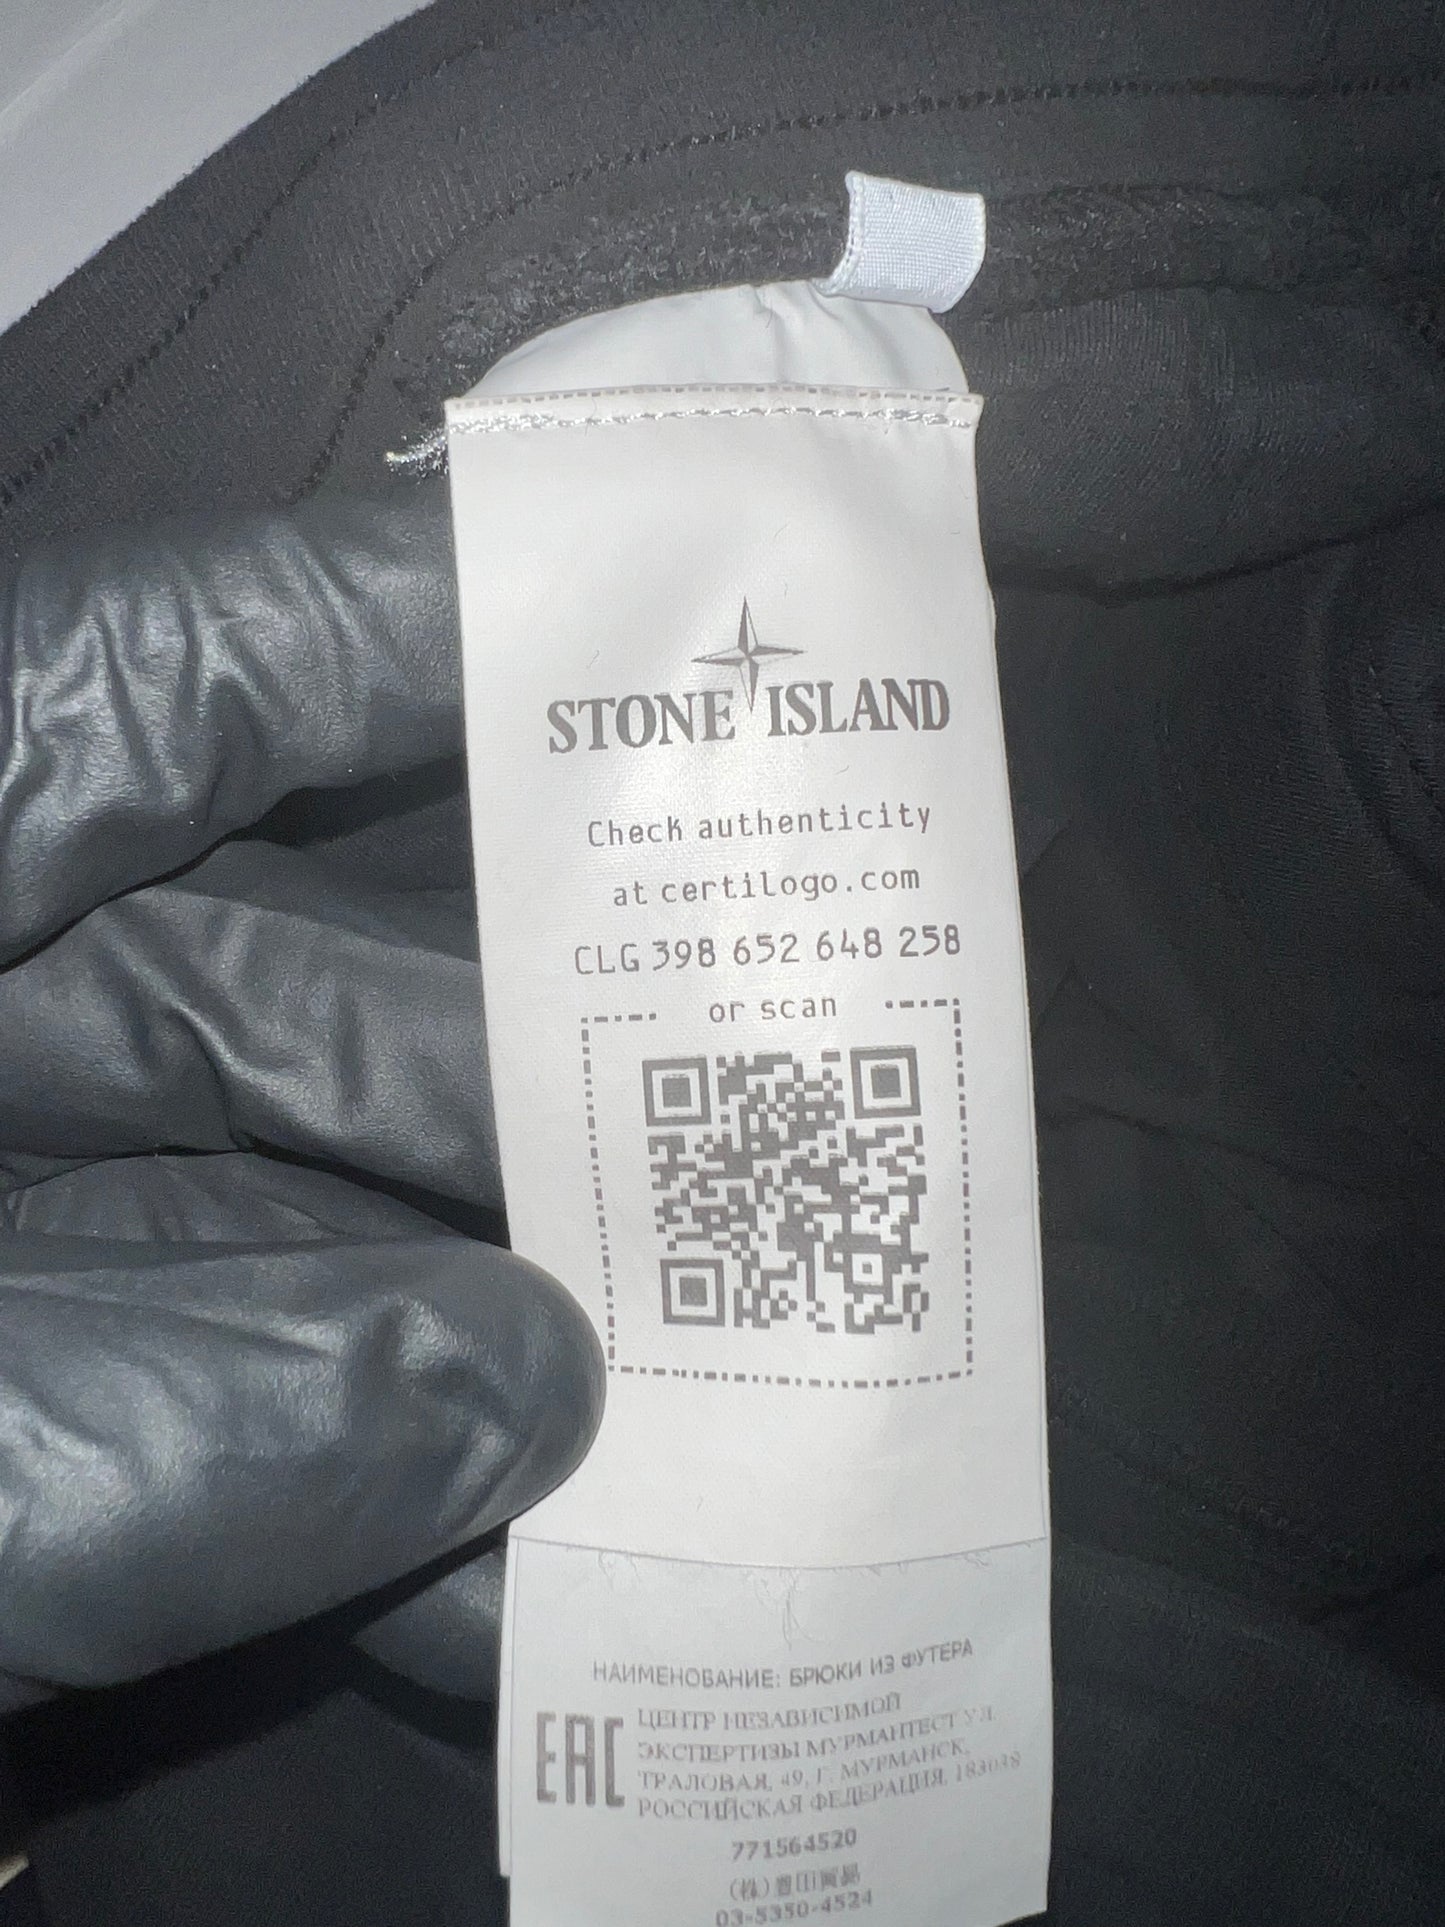 Stone Island Sweatpants